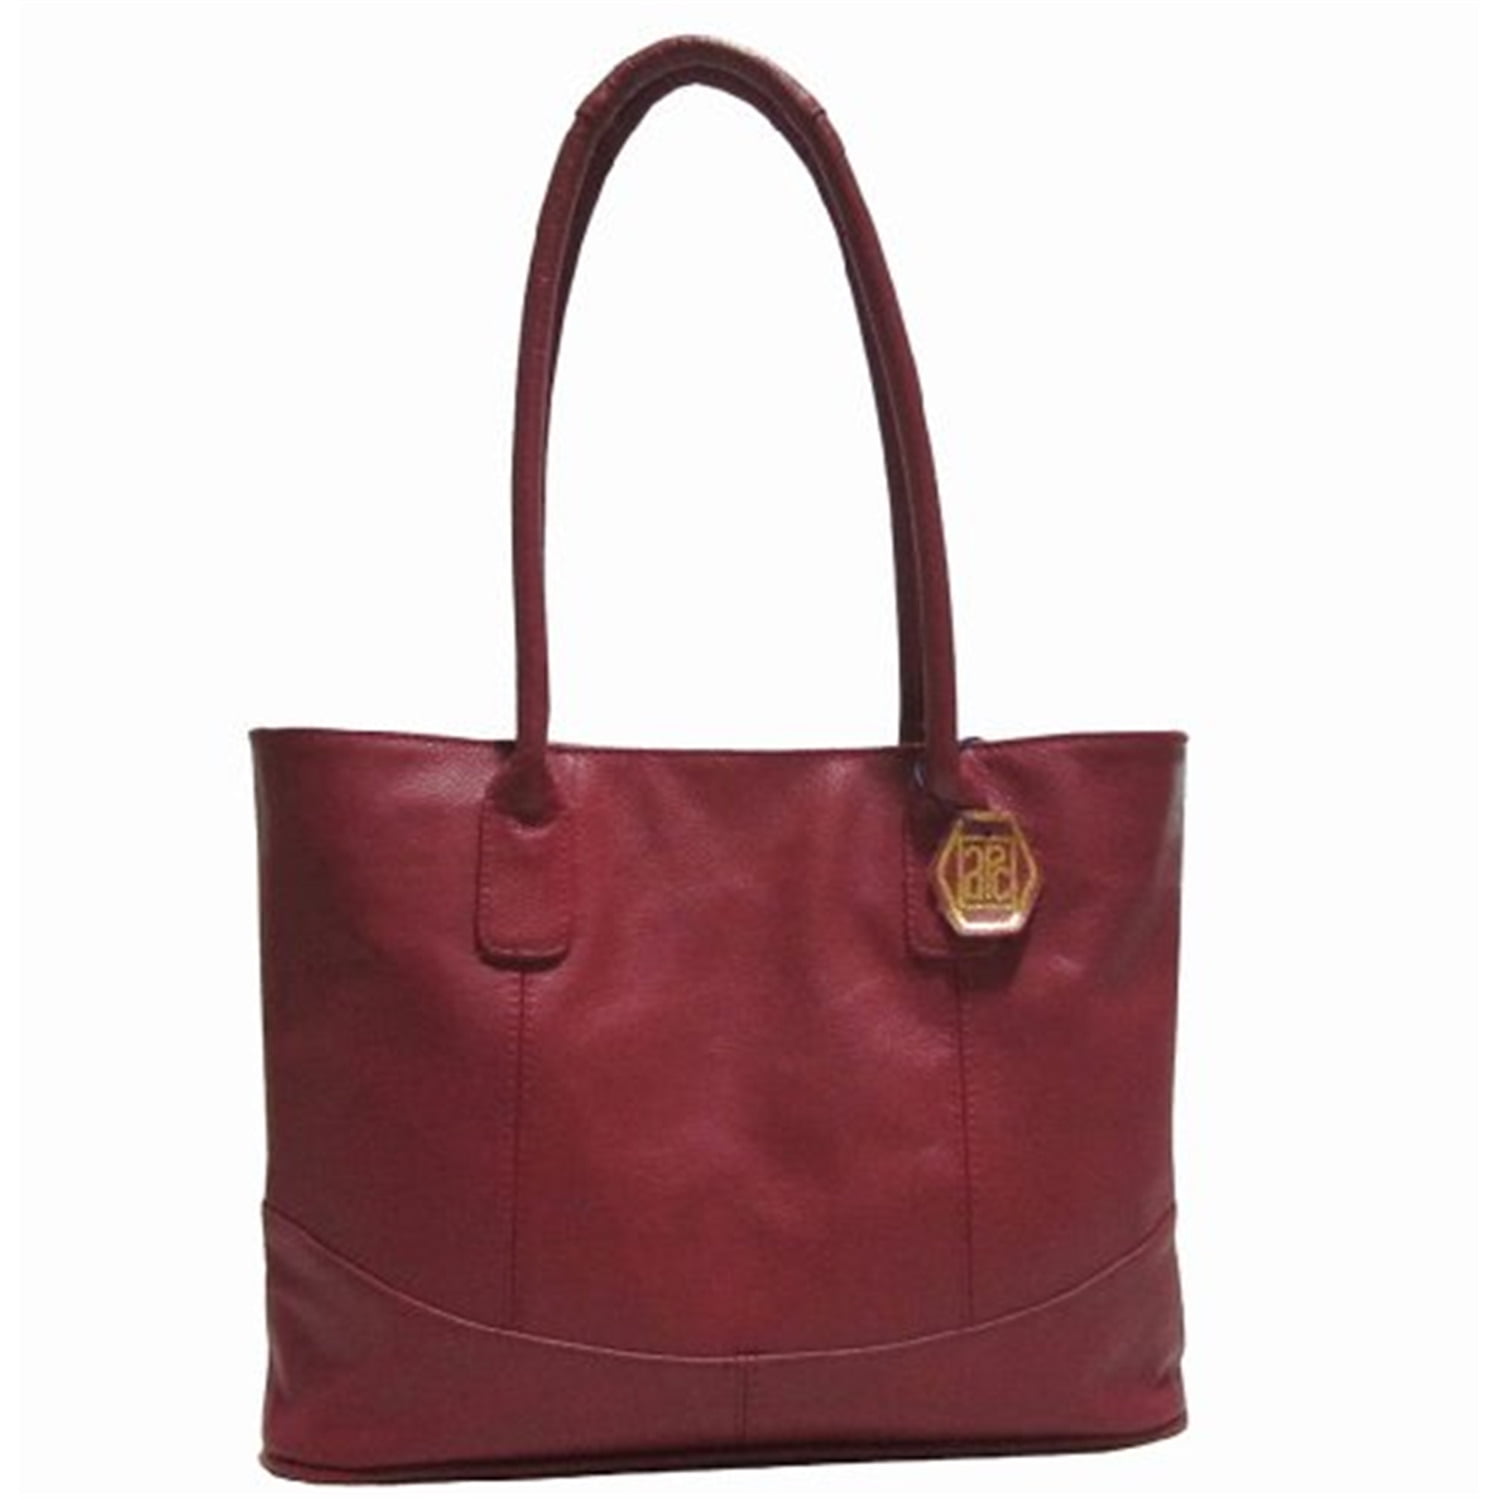 Frye Leather purse Bag/Satchel in blue/Ocean Medium Crossbody | eBay